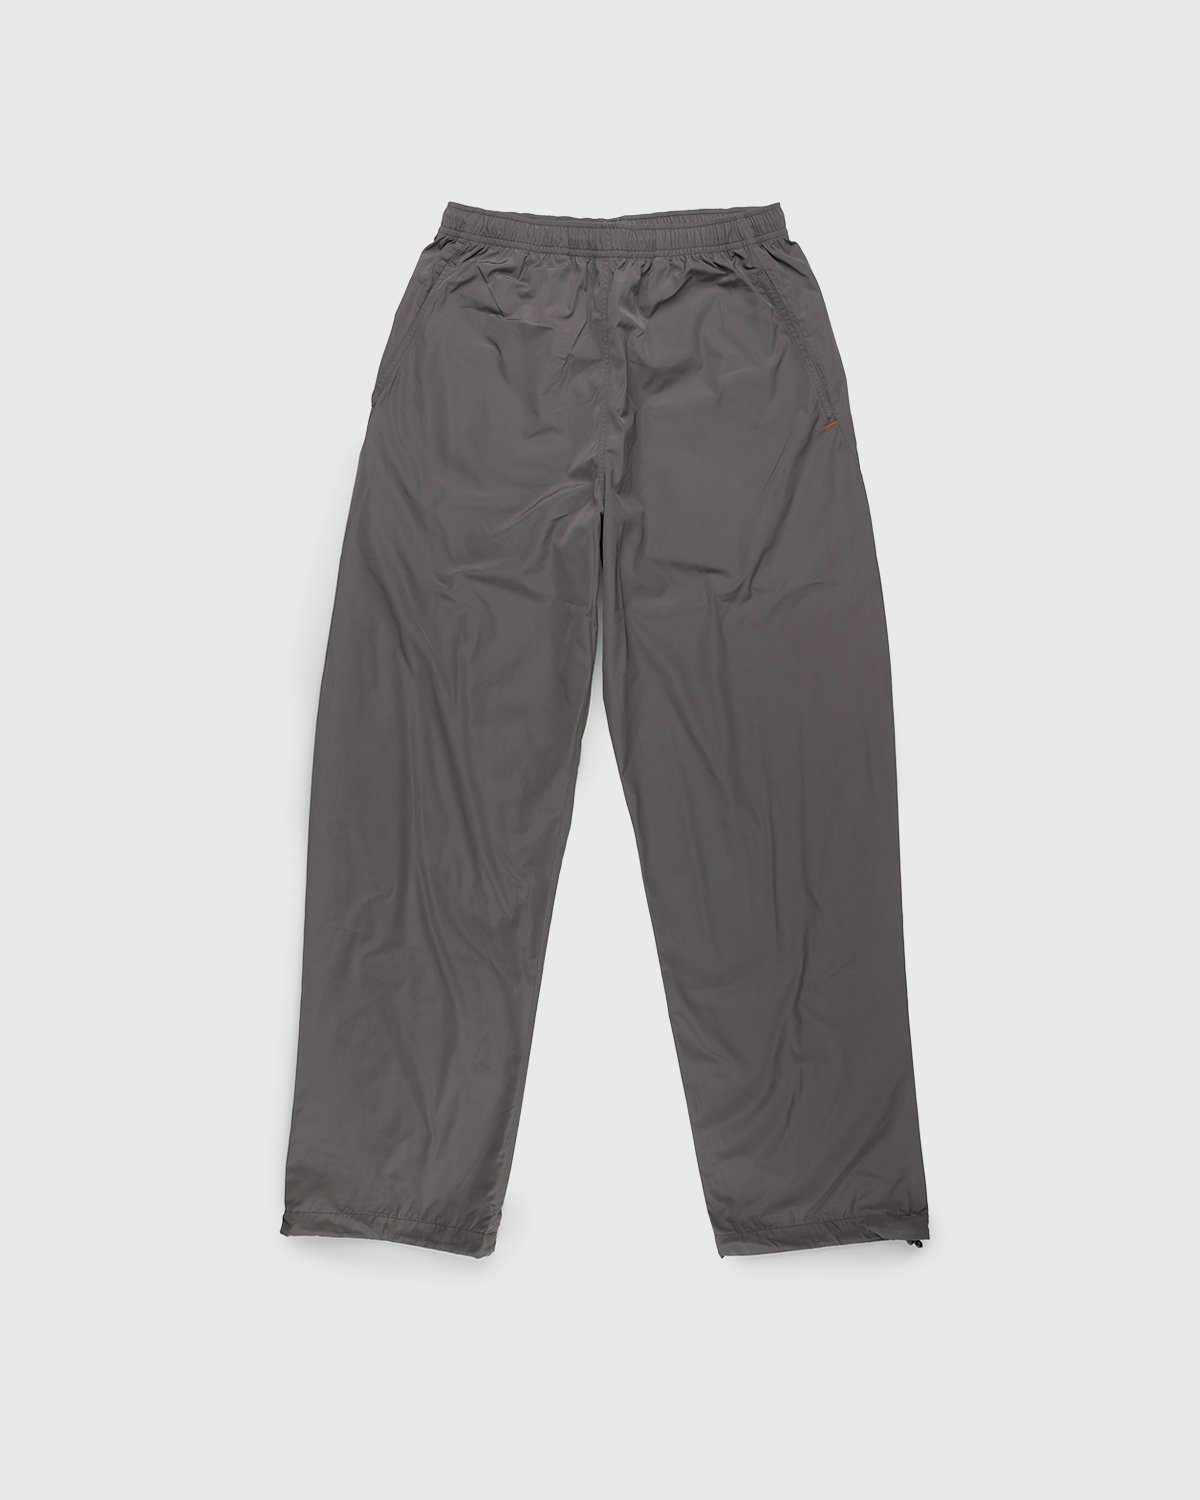 Heron Preston x Calvin Klein - Mens Track Pant Minimal Gray - Clothing - Grey - Image 1